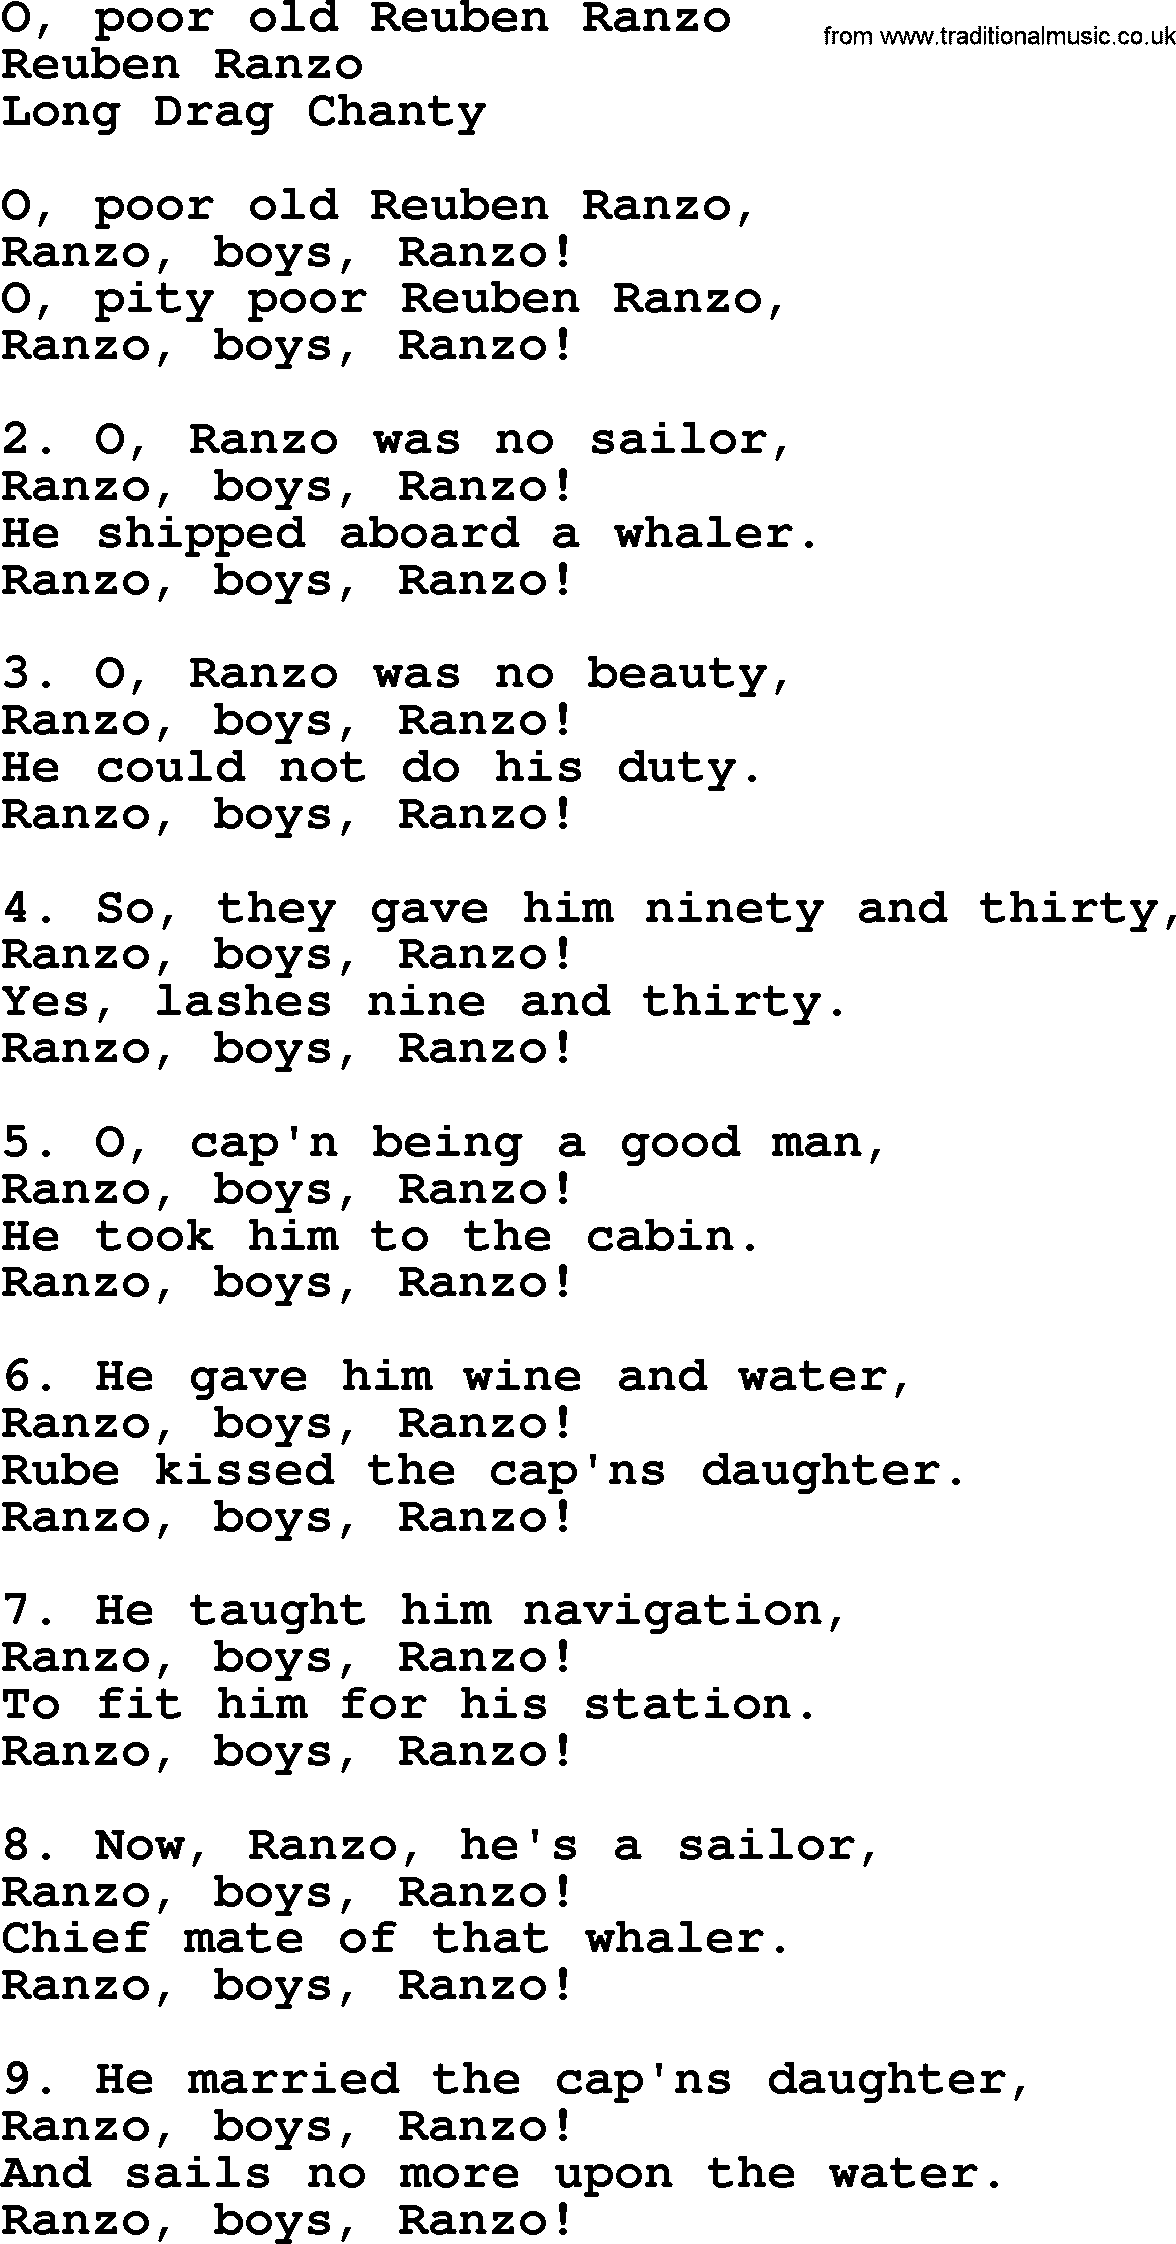 Sea Song or Shantie: O Poor Old Reuben Ranzo, lyrics